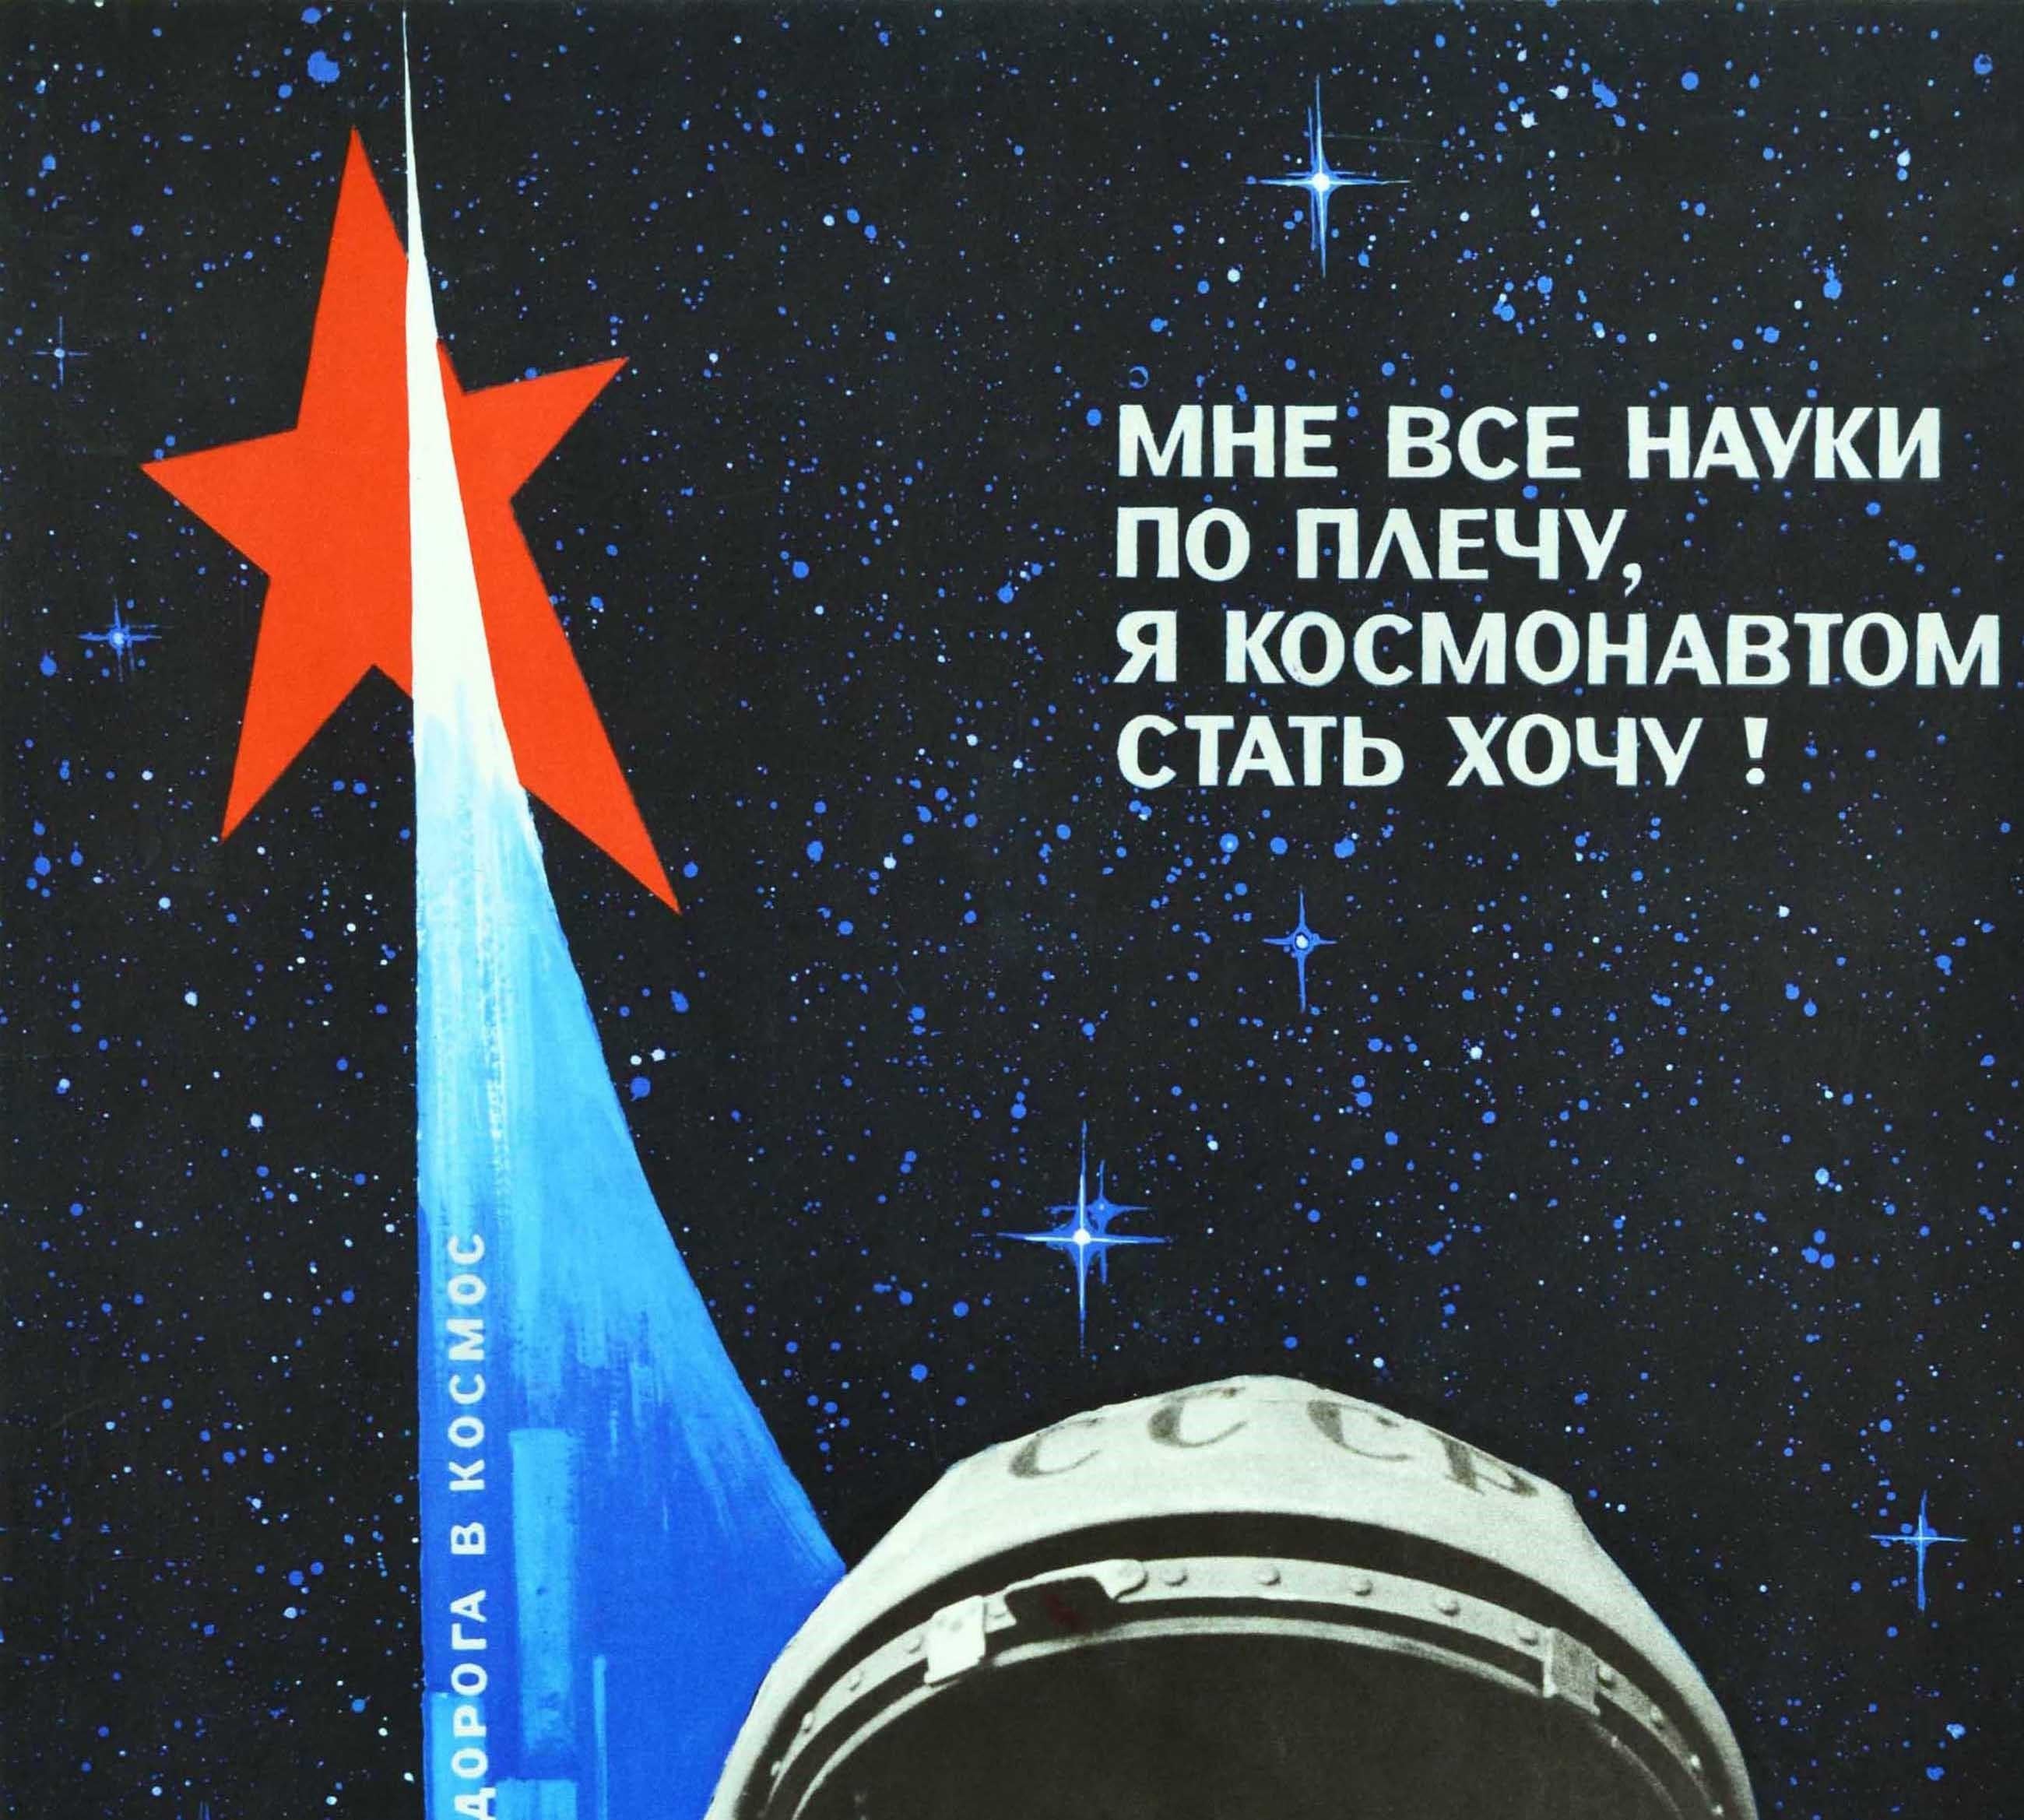 Original Vintage Space Poster Soviet School Boy Cosmonaut Science Education USSR - Print by Galkin